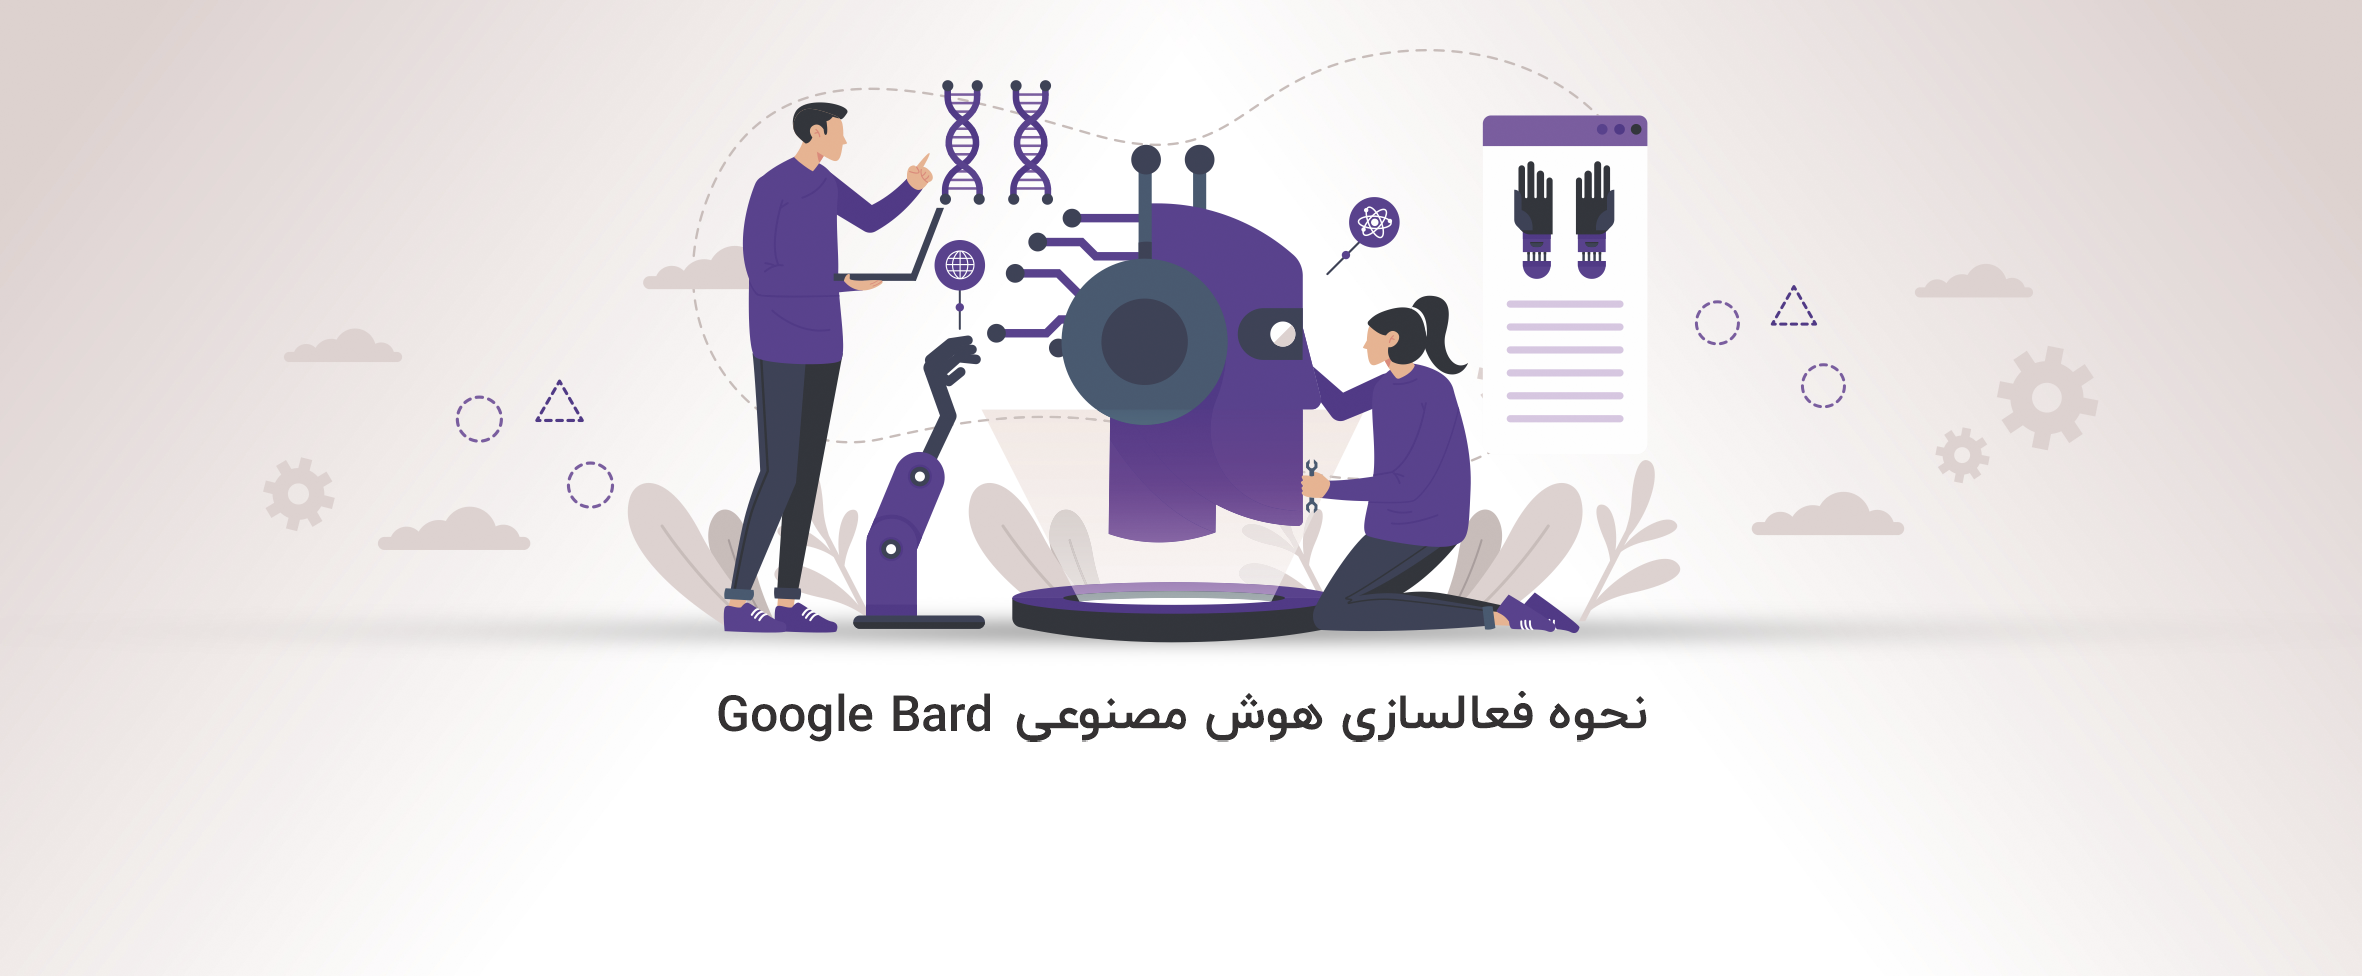 نحوه فعال سازی اکانت Google Bard - آذرسیس